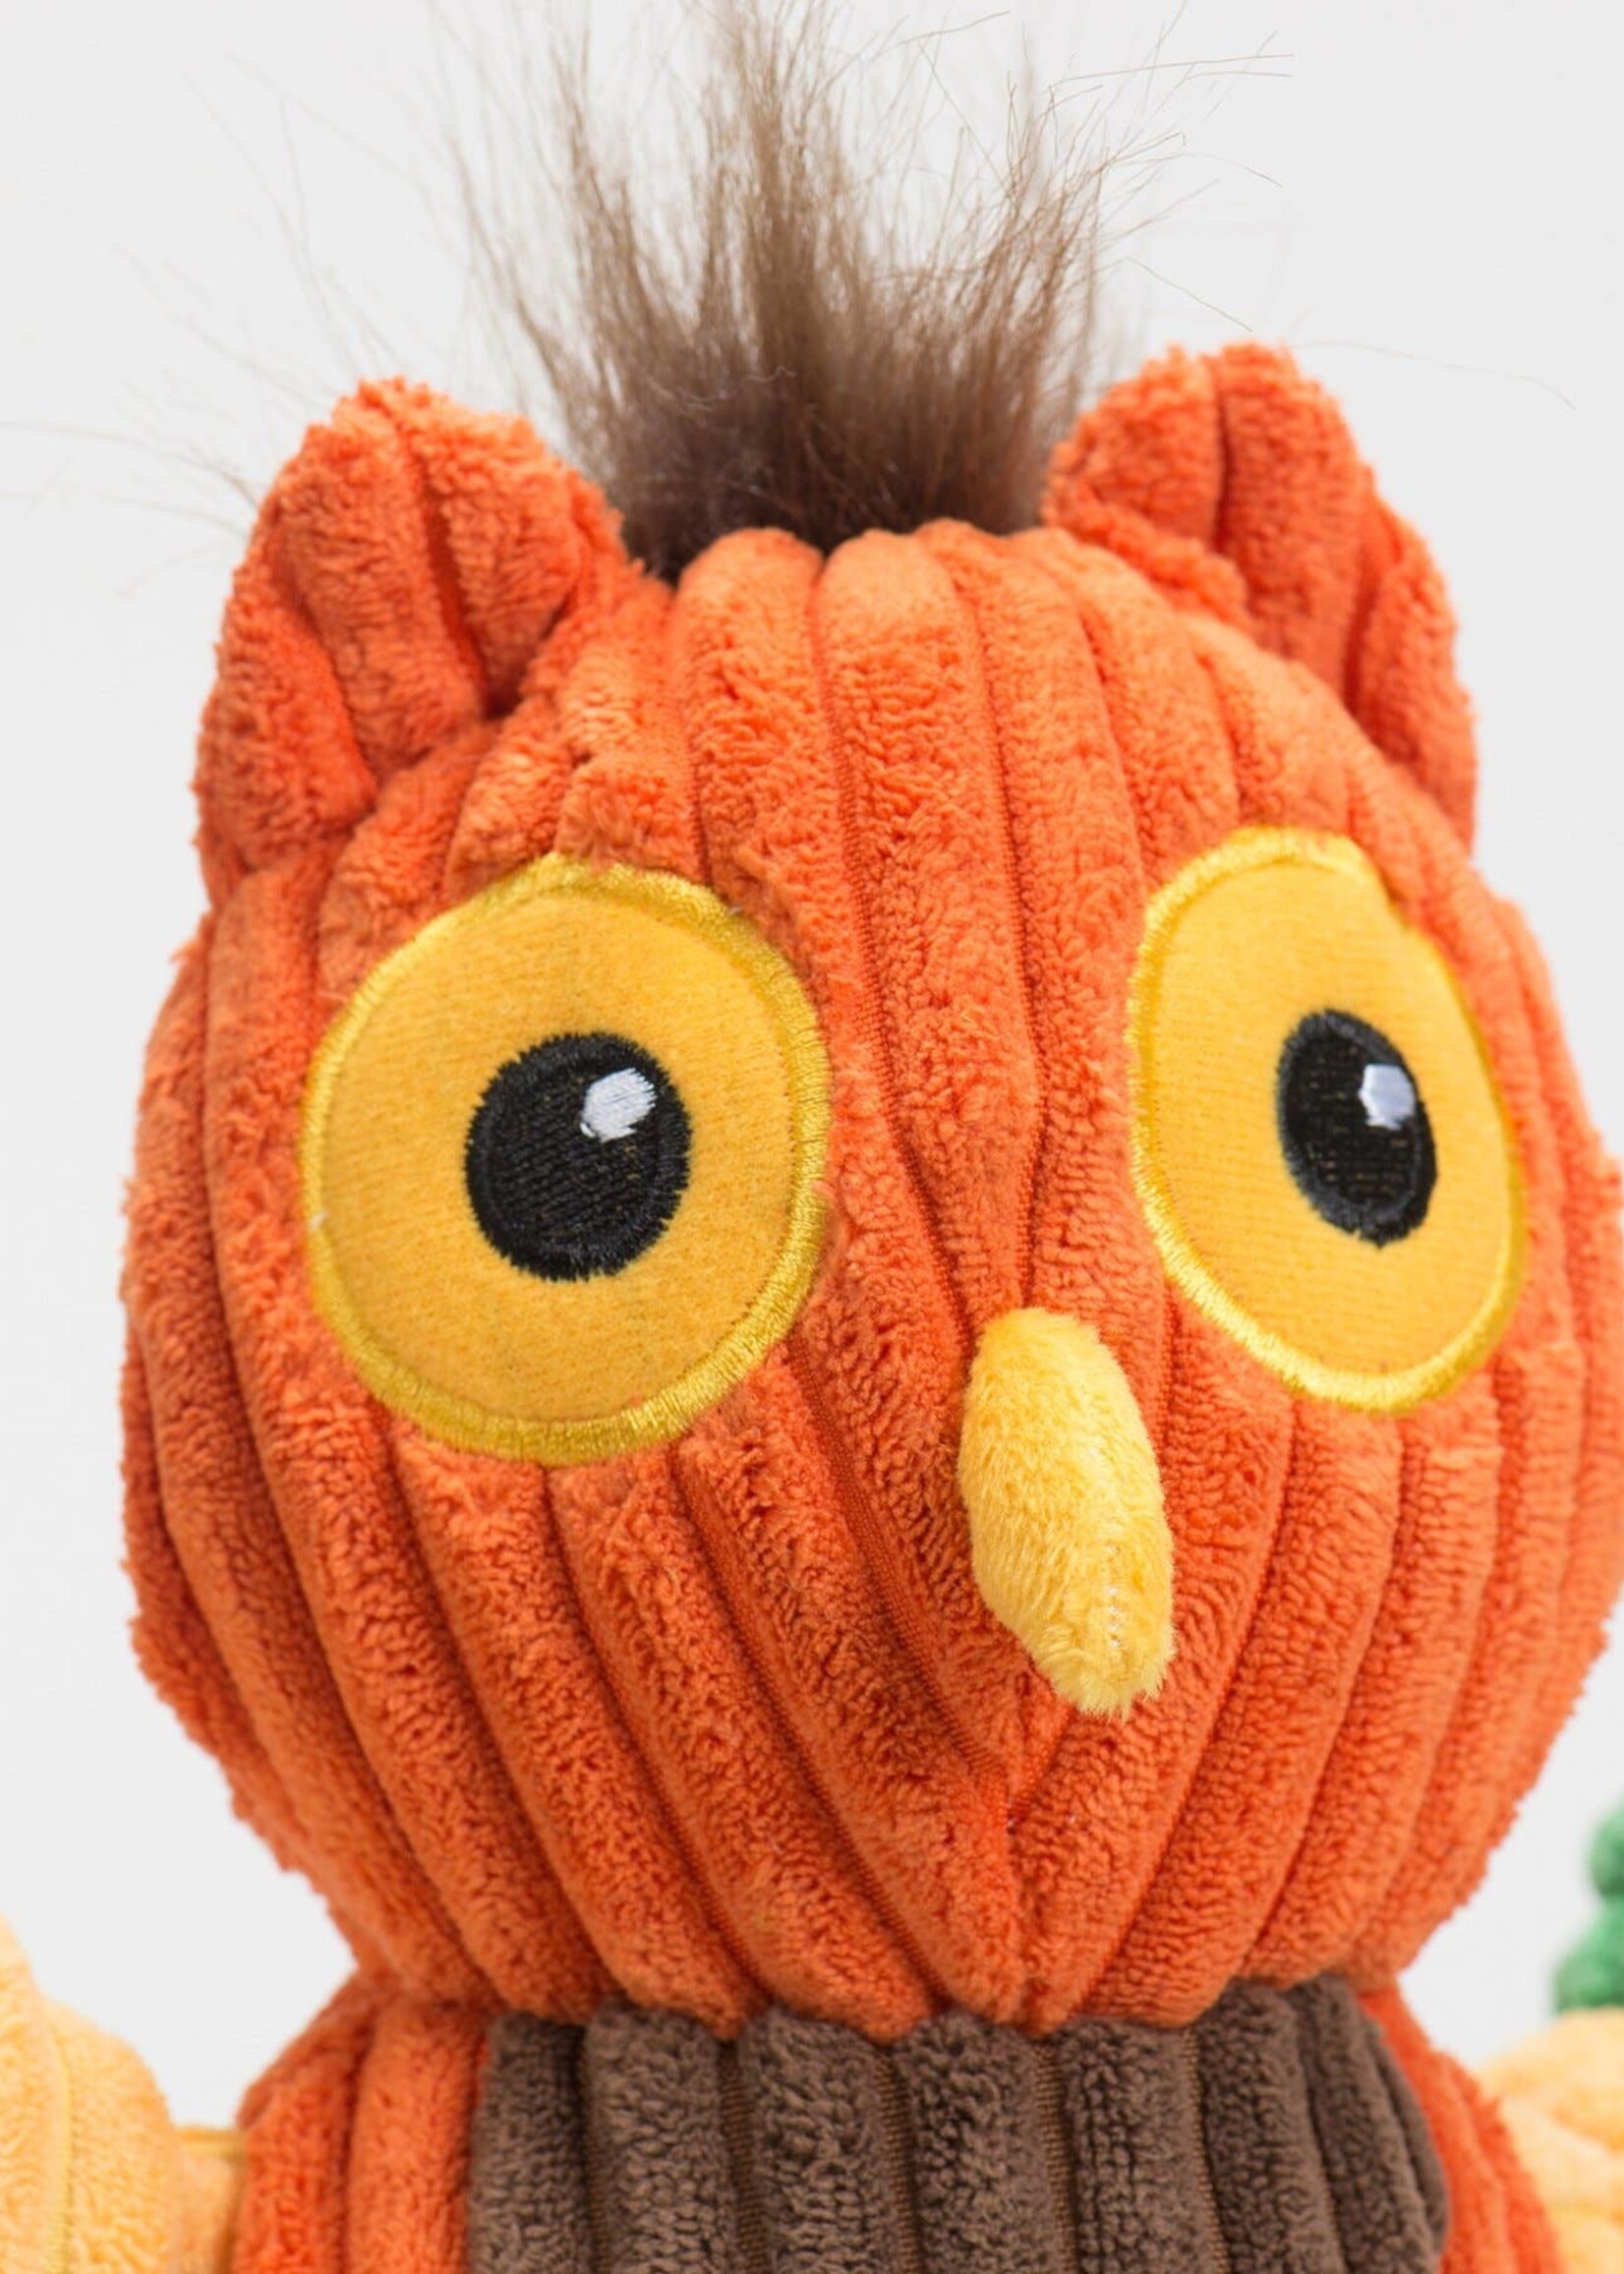 HuggleHounds HuggleHounds Limited Edition Poppy the Owl Knottie Plush Dog Toy Large